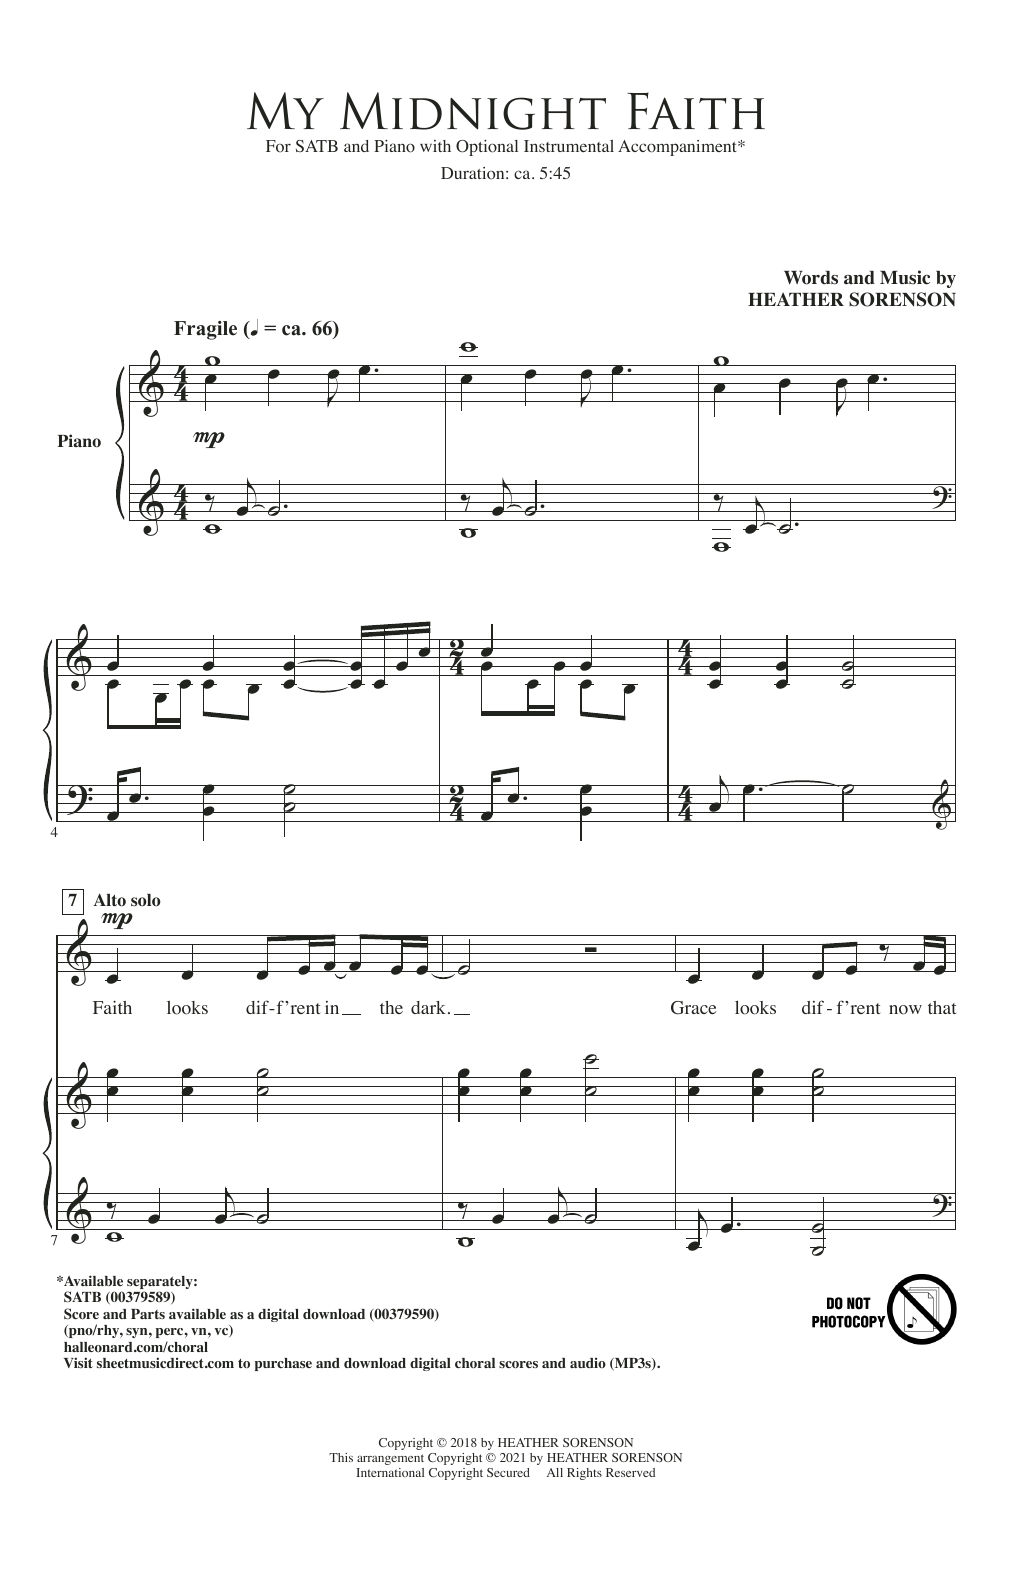 Heather Sorenson My Midnight Faith Sheet Music Notes & Chords for SATB Choir - Download or Print PDF